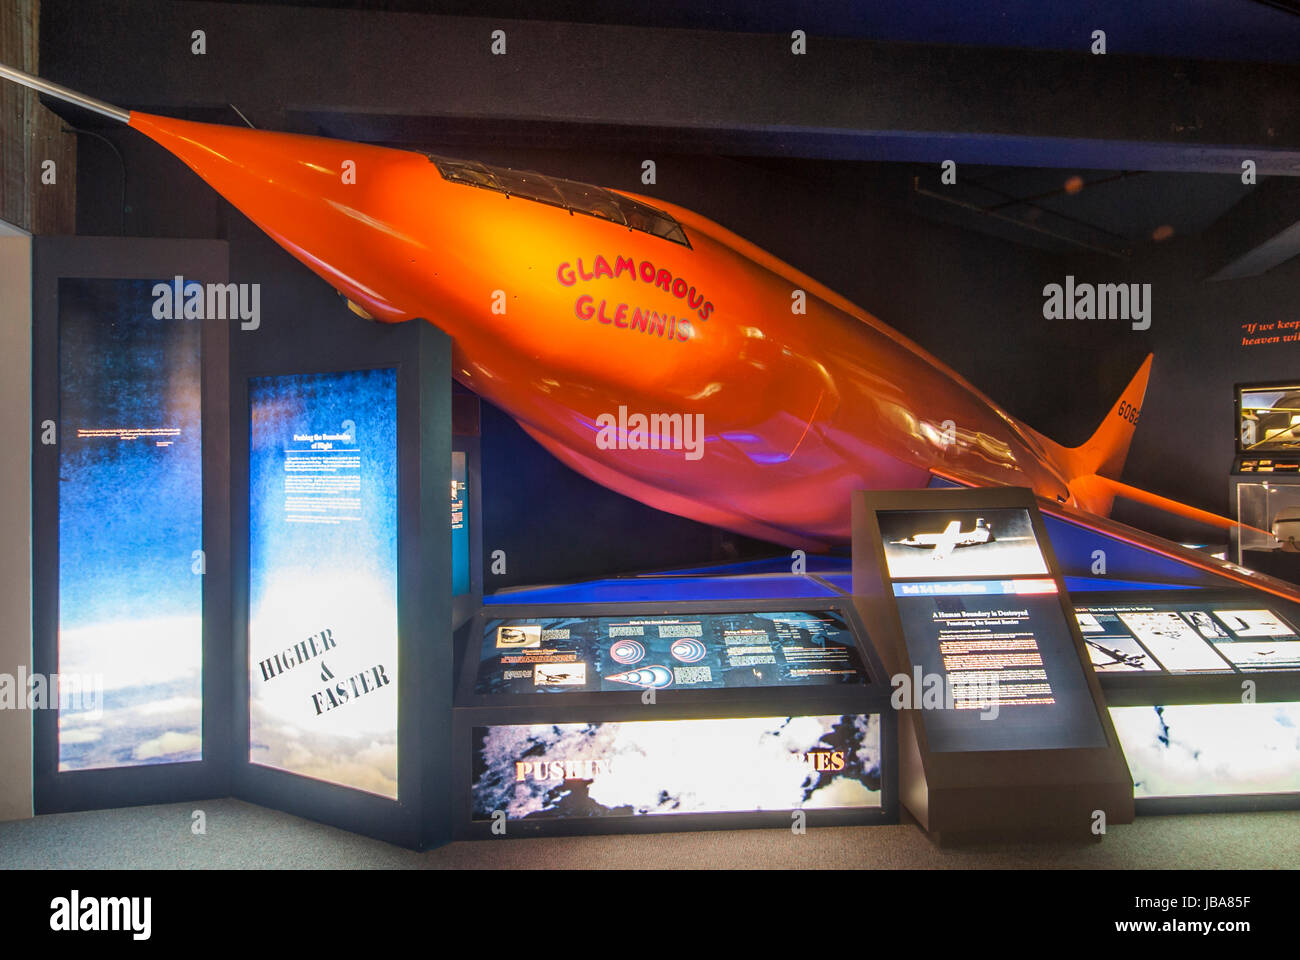 Glamorous Glennis X-1 rocket plane, Kansas Cosmosphere and Space Center, Hutchinson, Kansas. Stock Photo